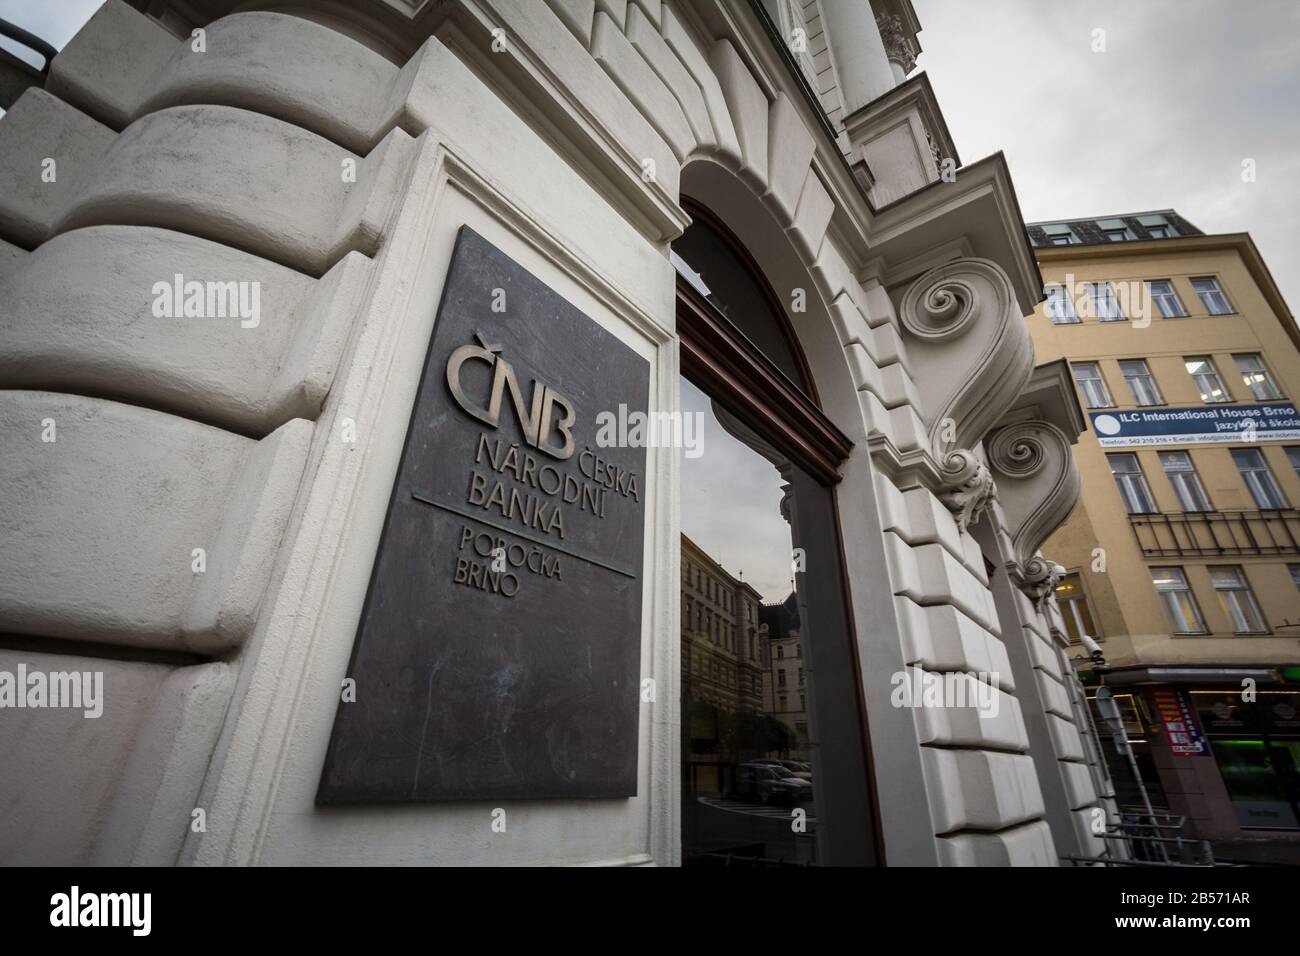 BRNO, CZECHIA - NOVEMBER 5, 2019: Ceska Narodni Banka CNB logo in front of their office for Brno. CNB, Or Czech National Bank, is Czechia's Central ba Stock Photo